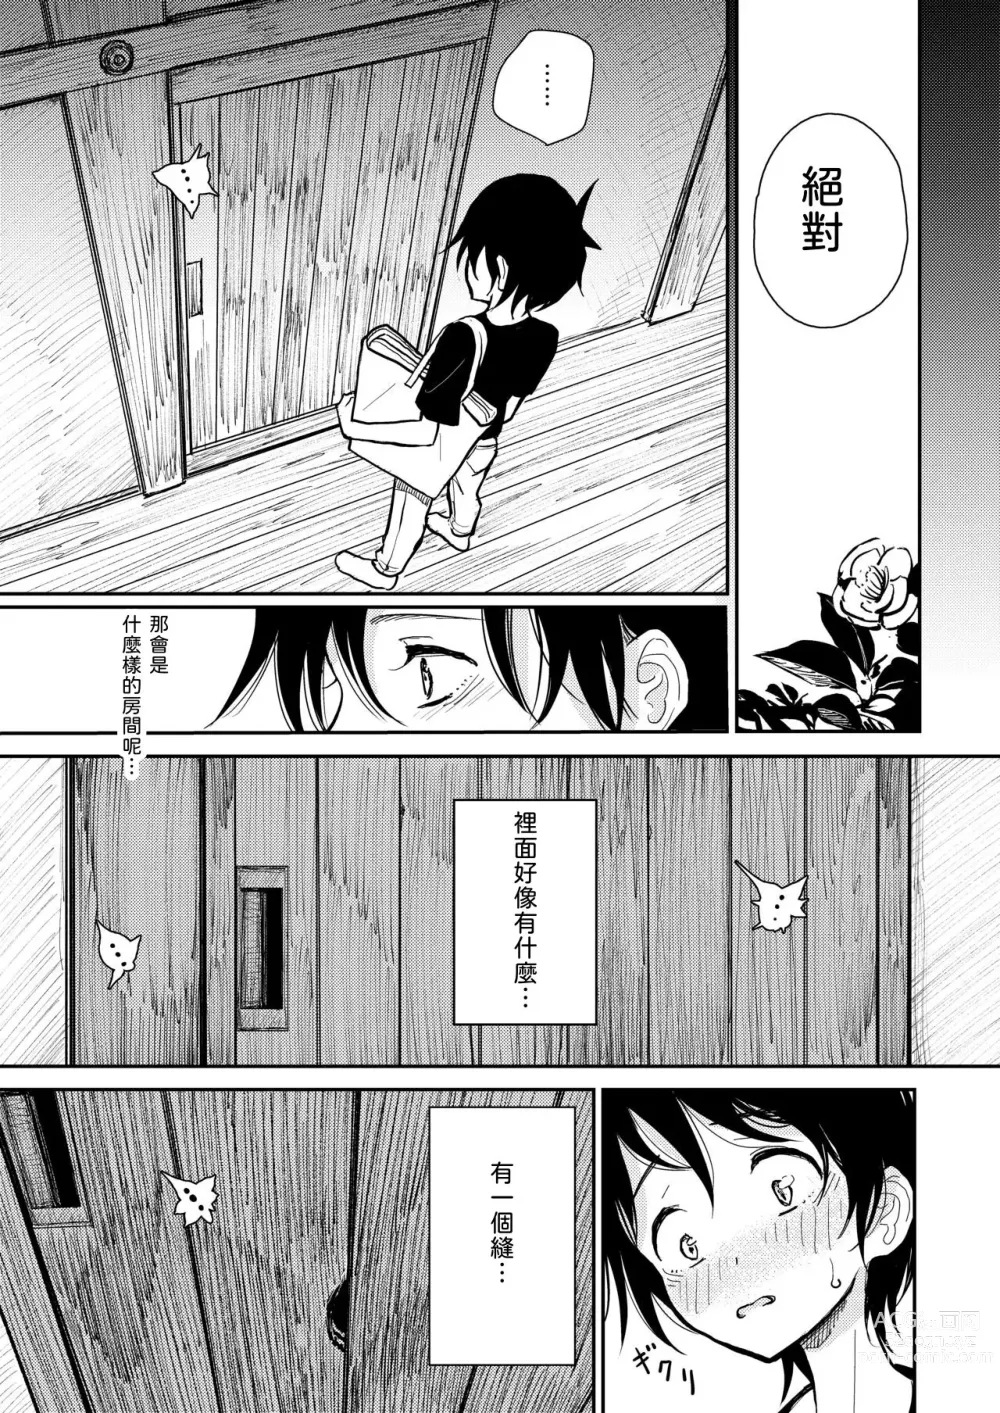 Page 18 of manga Dhibi Hazuki-sensei 1